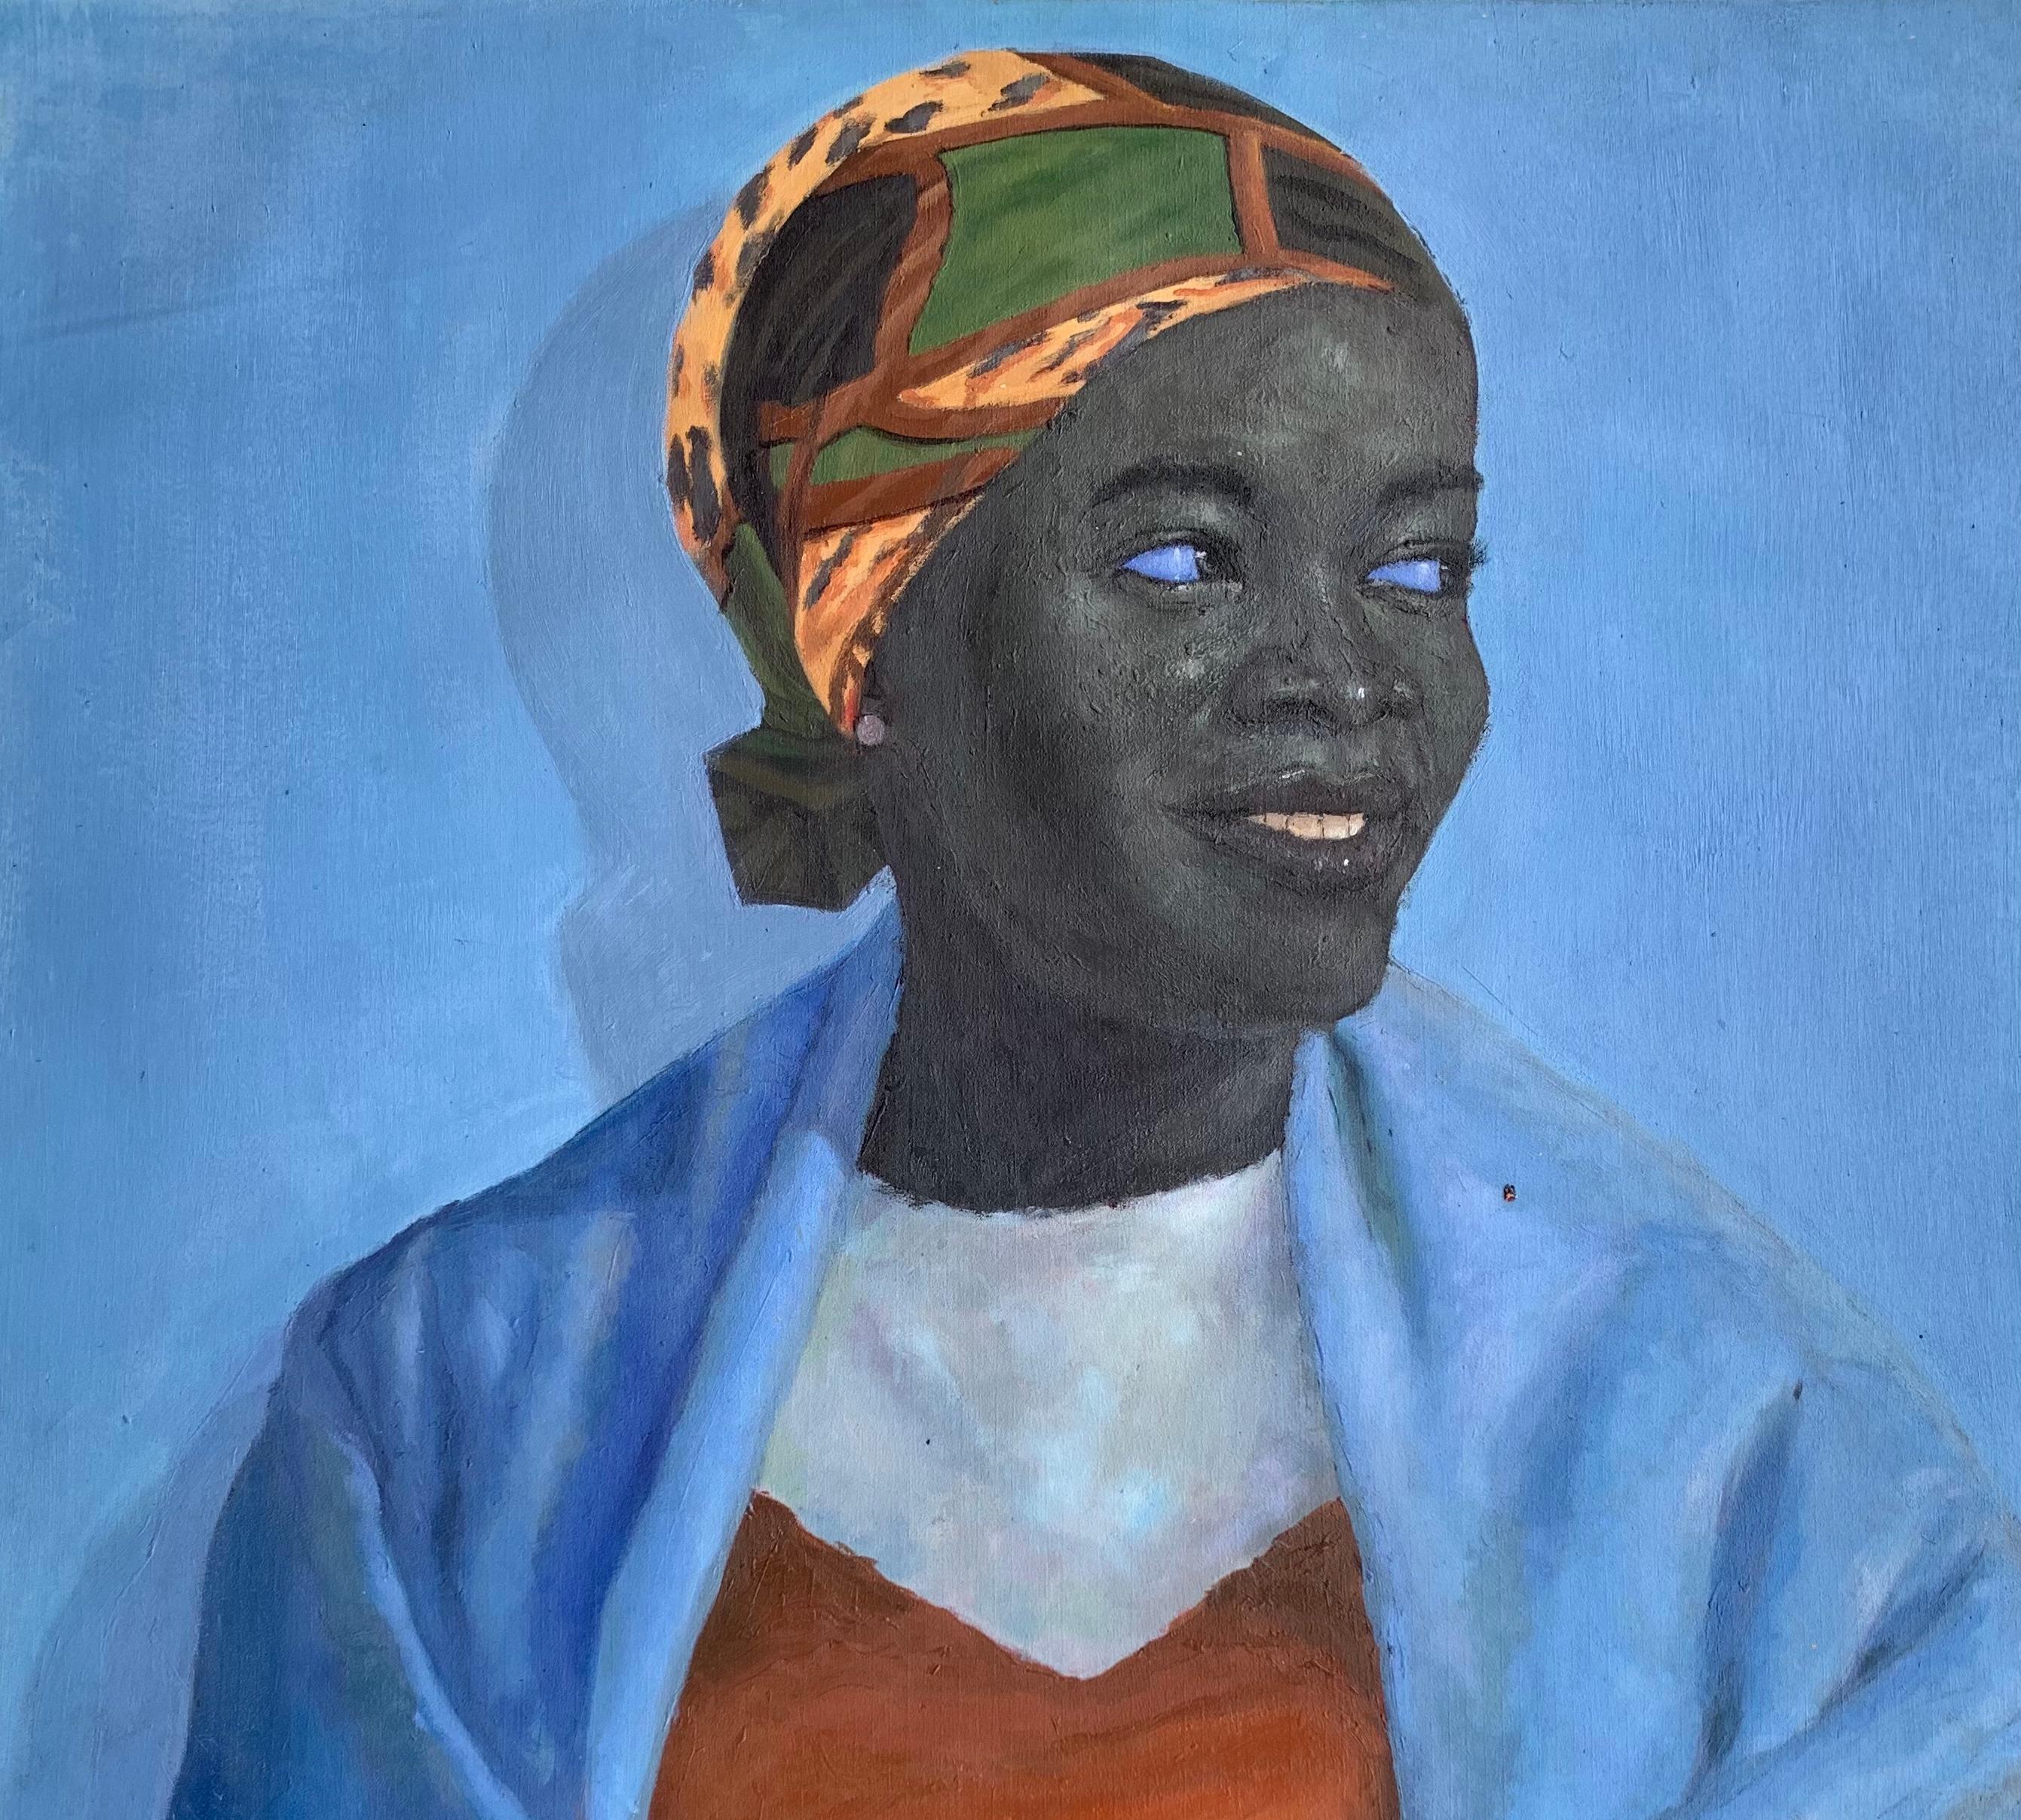 Blaues Handtuch 1 – Painting von Olamilekan Bello